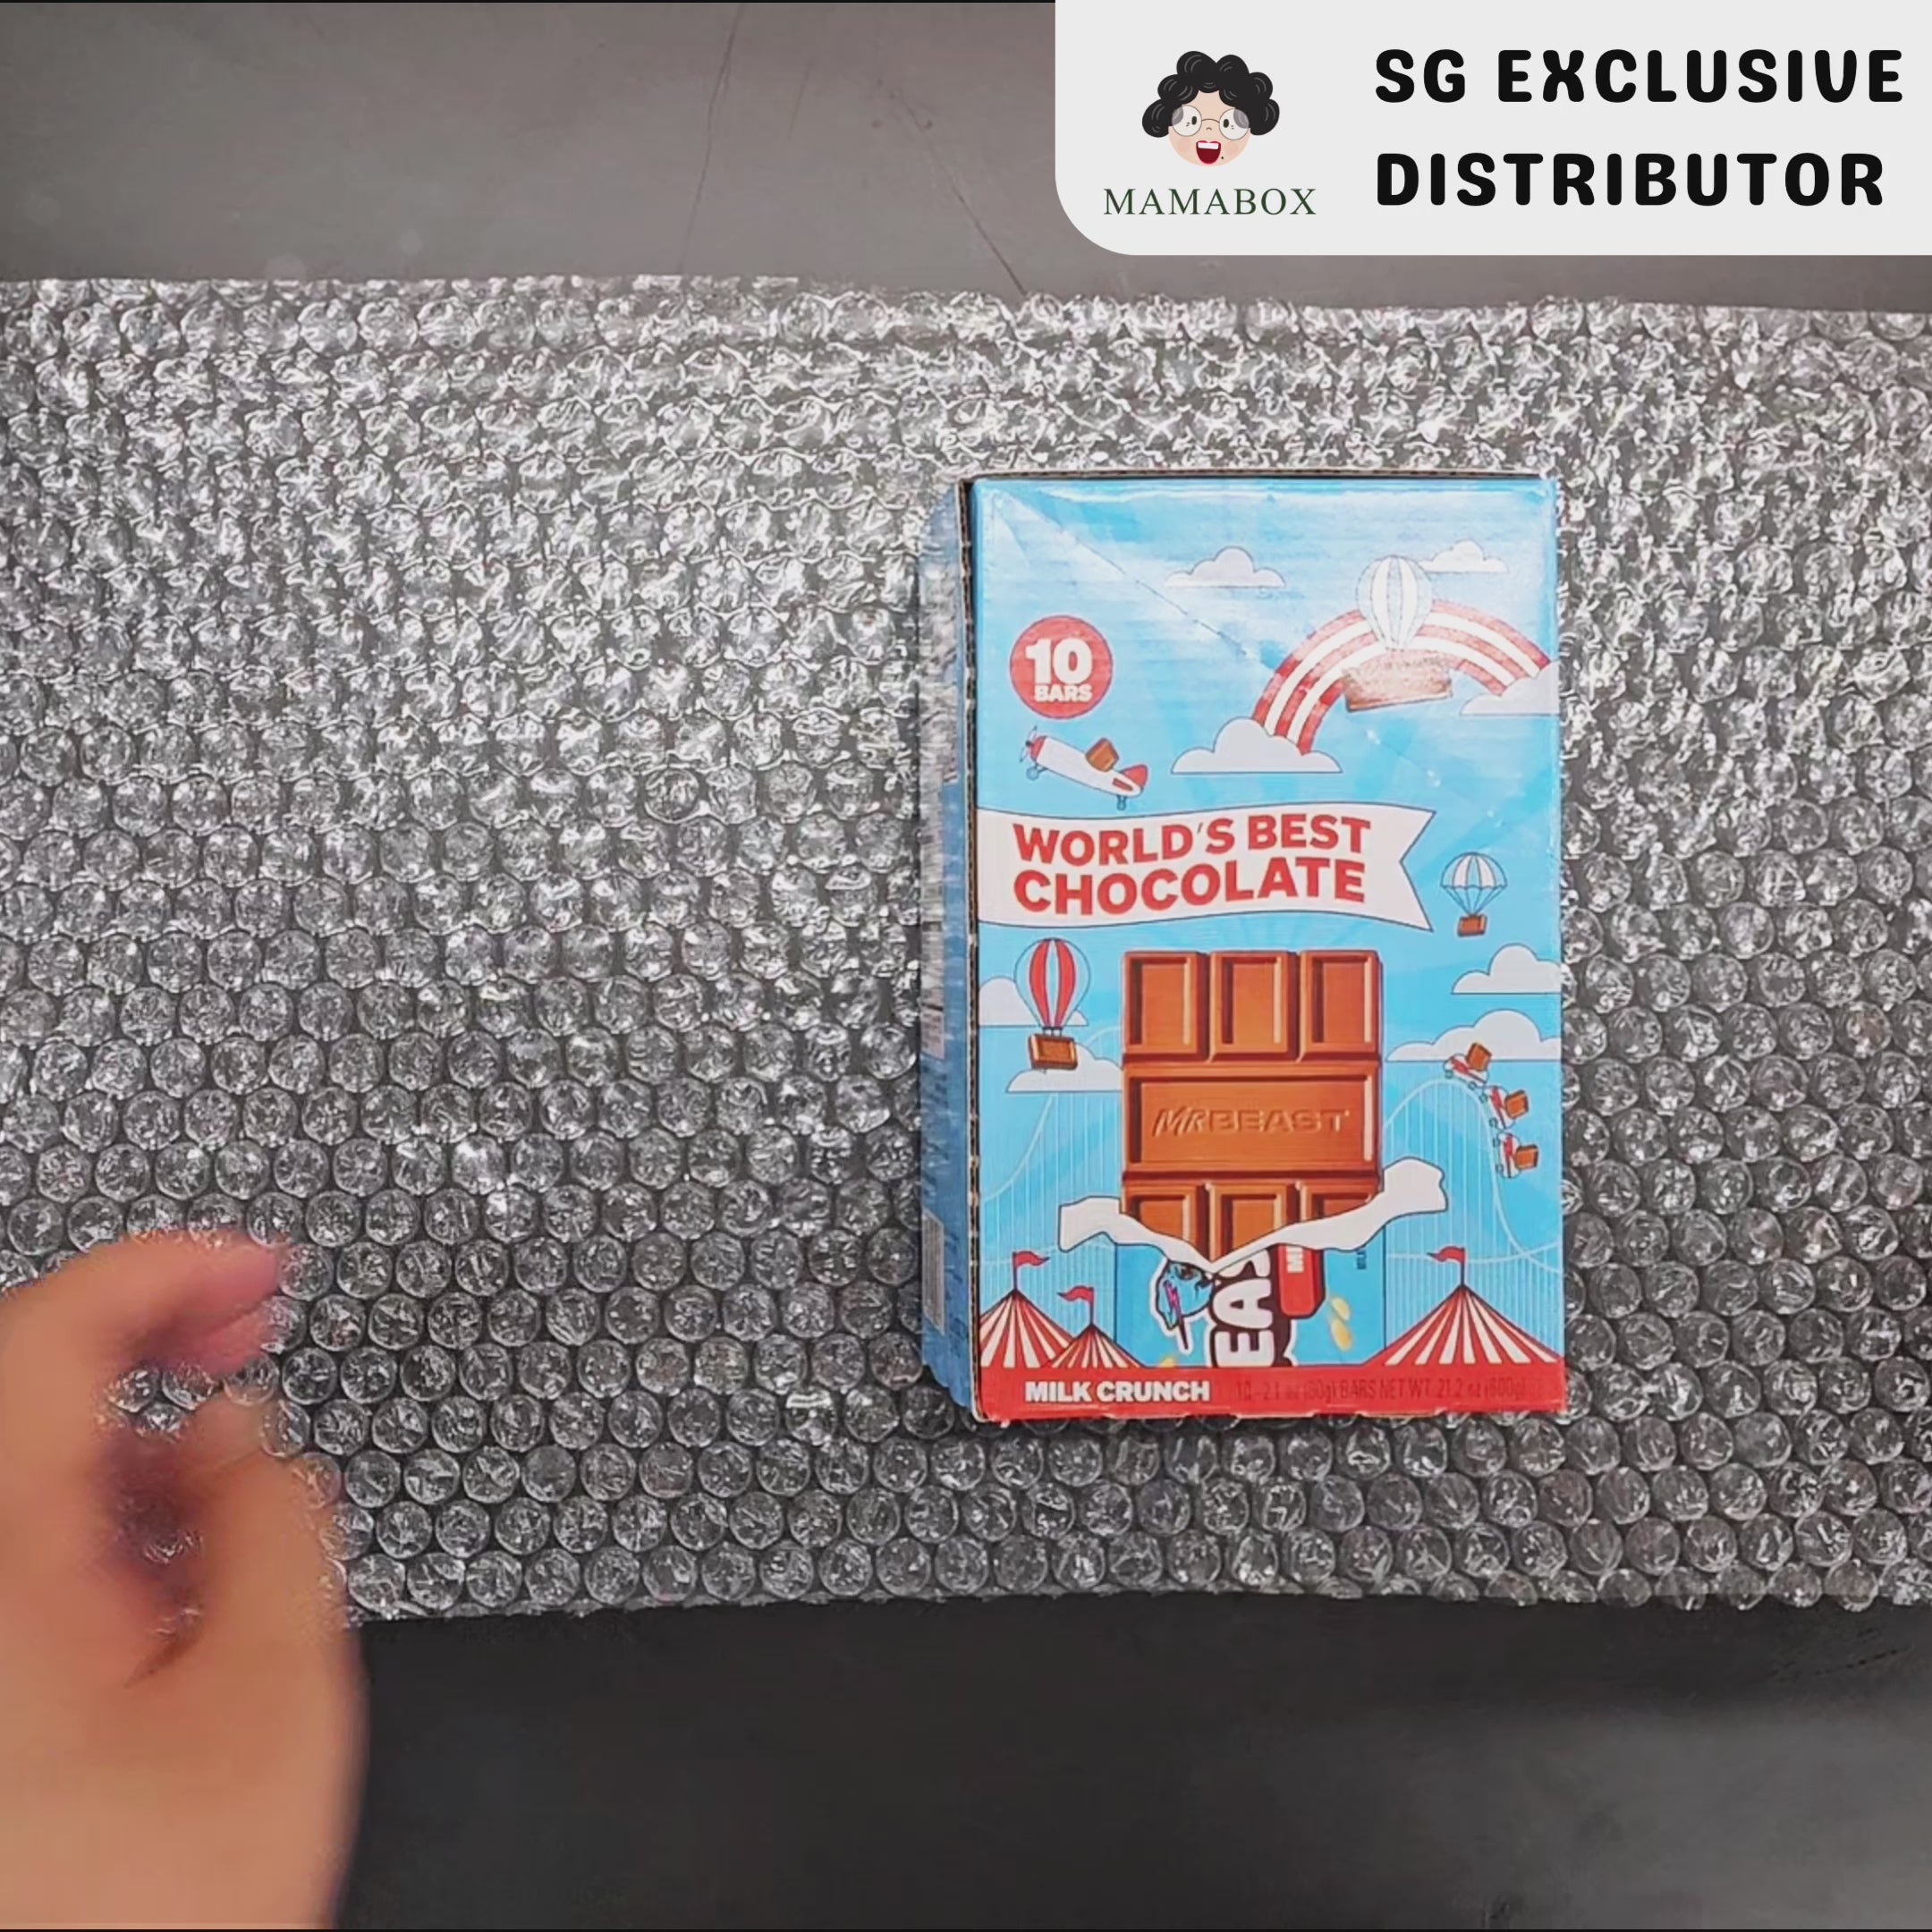 [Official Seller] Box of 24 Feastables MrBeast | New Bars | Peanut Butter (24 Count x 35g)